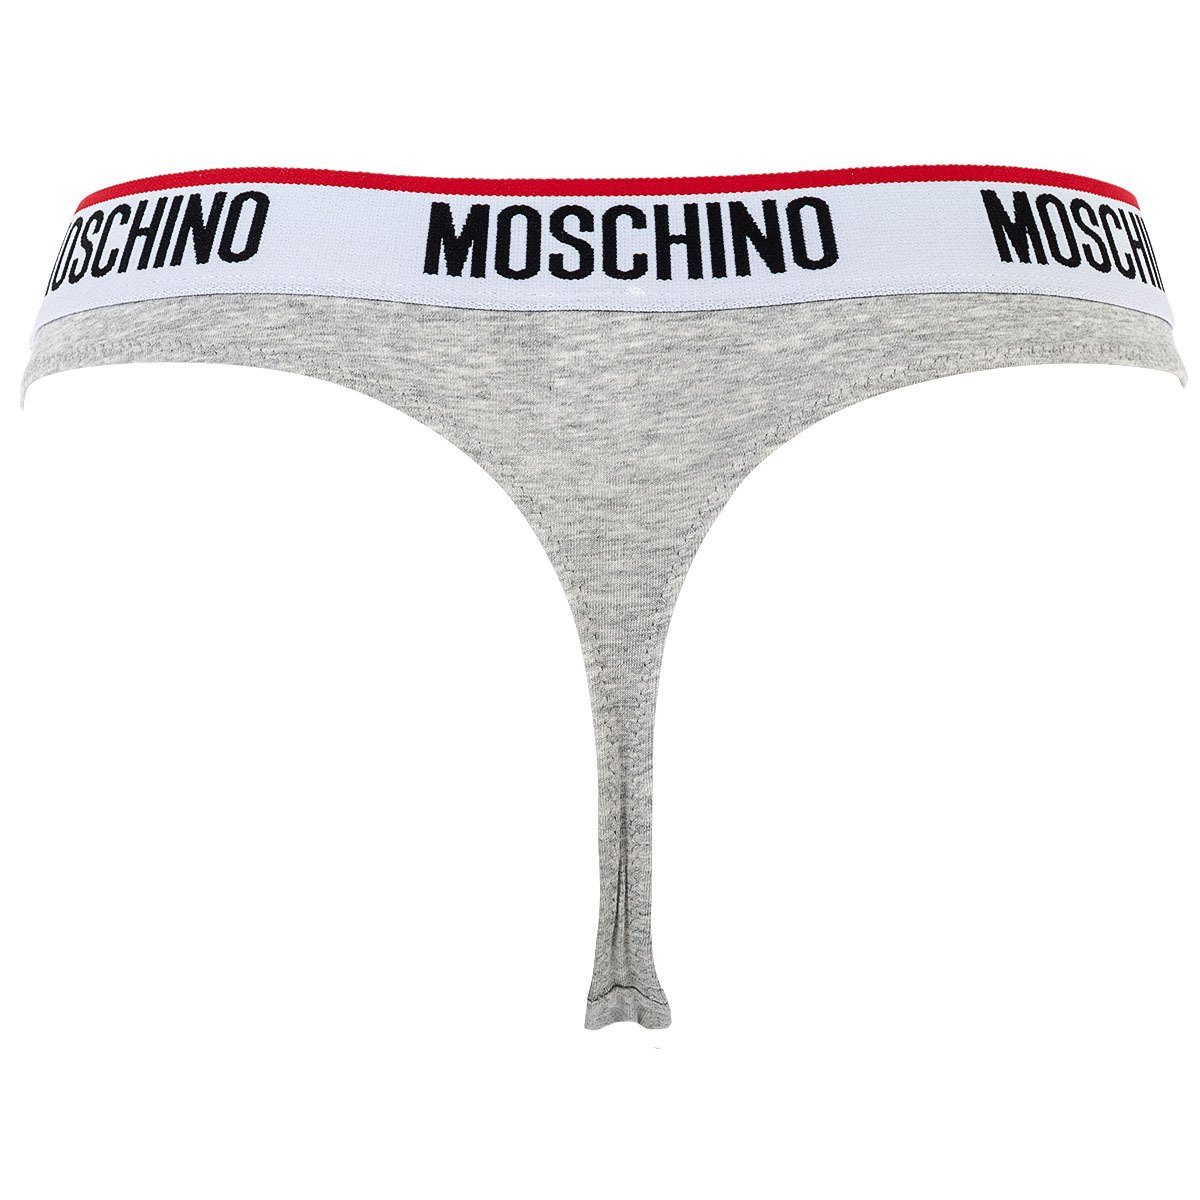 Moschino String Damen Unterhose, Grau - Strings 2er Pack Cotton Slips